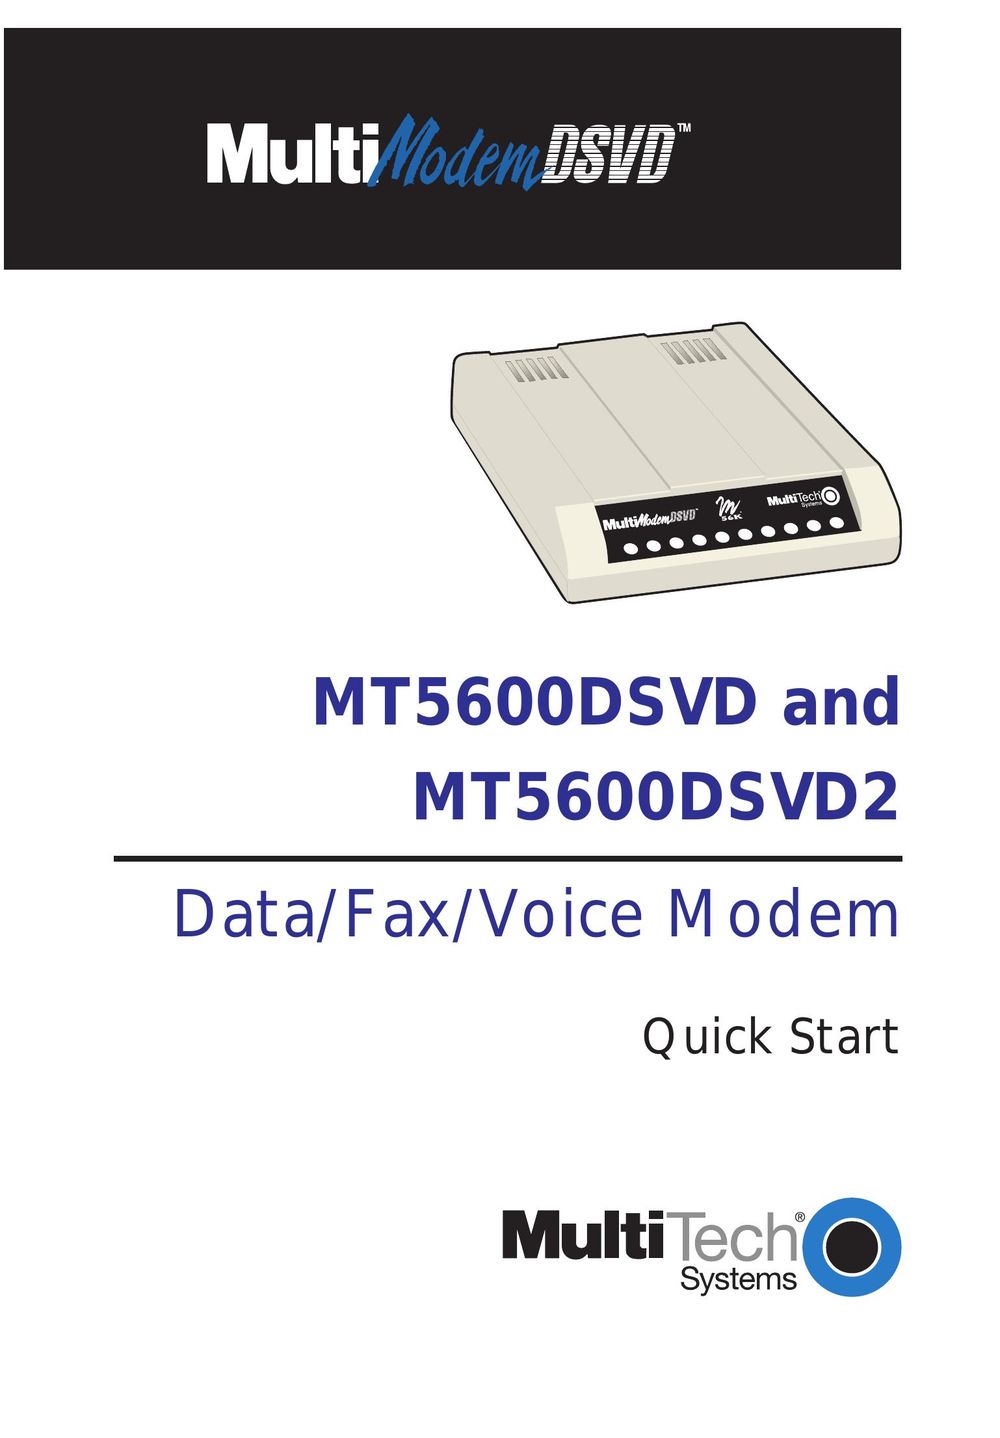 Multi-Tech Systems MT5600DSVD2 Modem User Manual